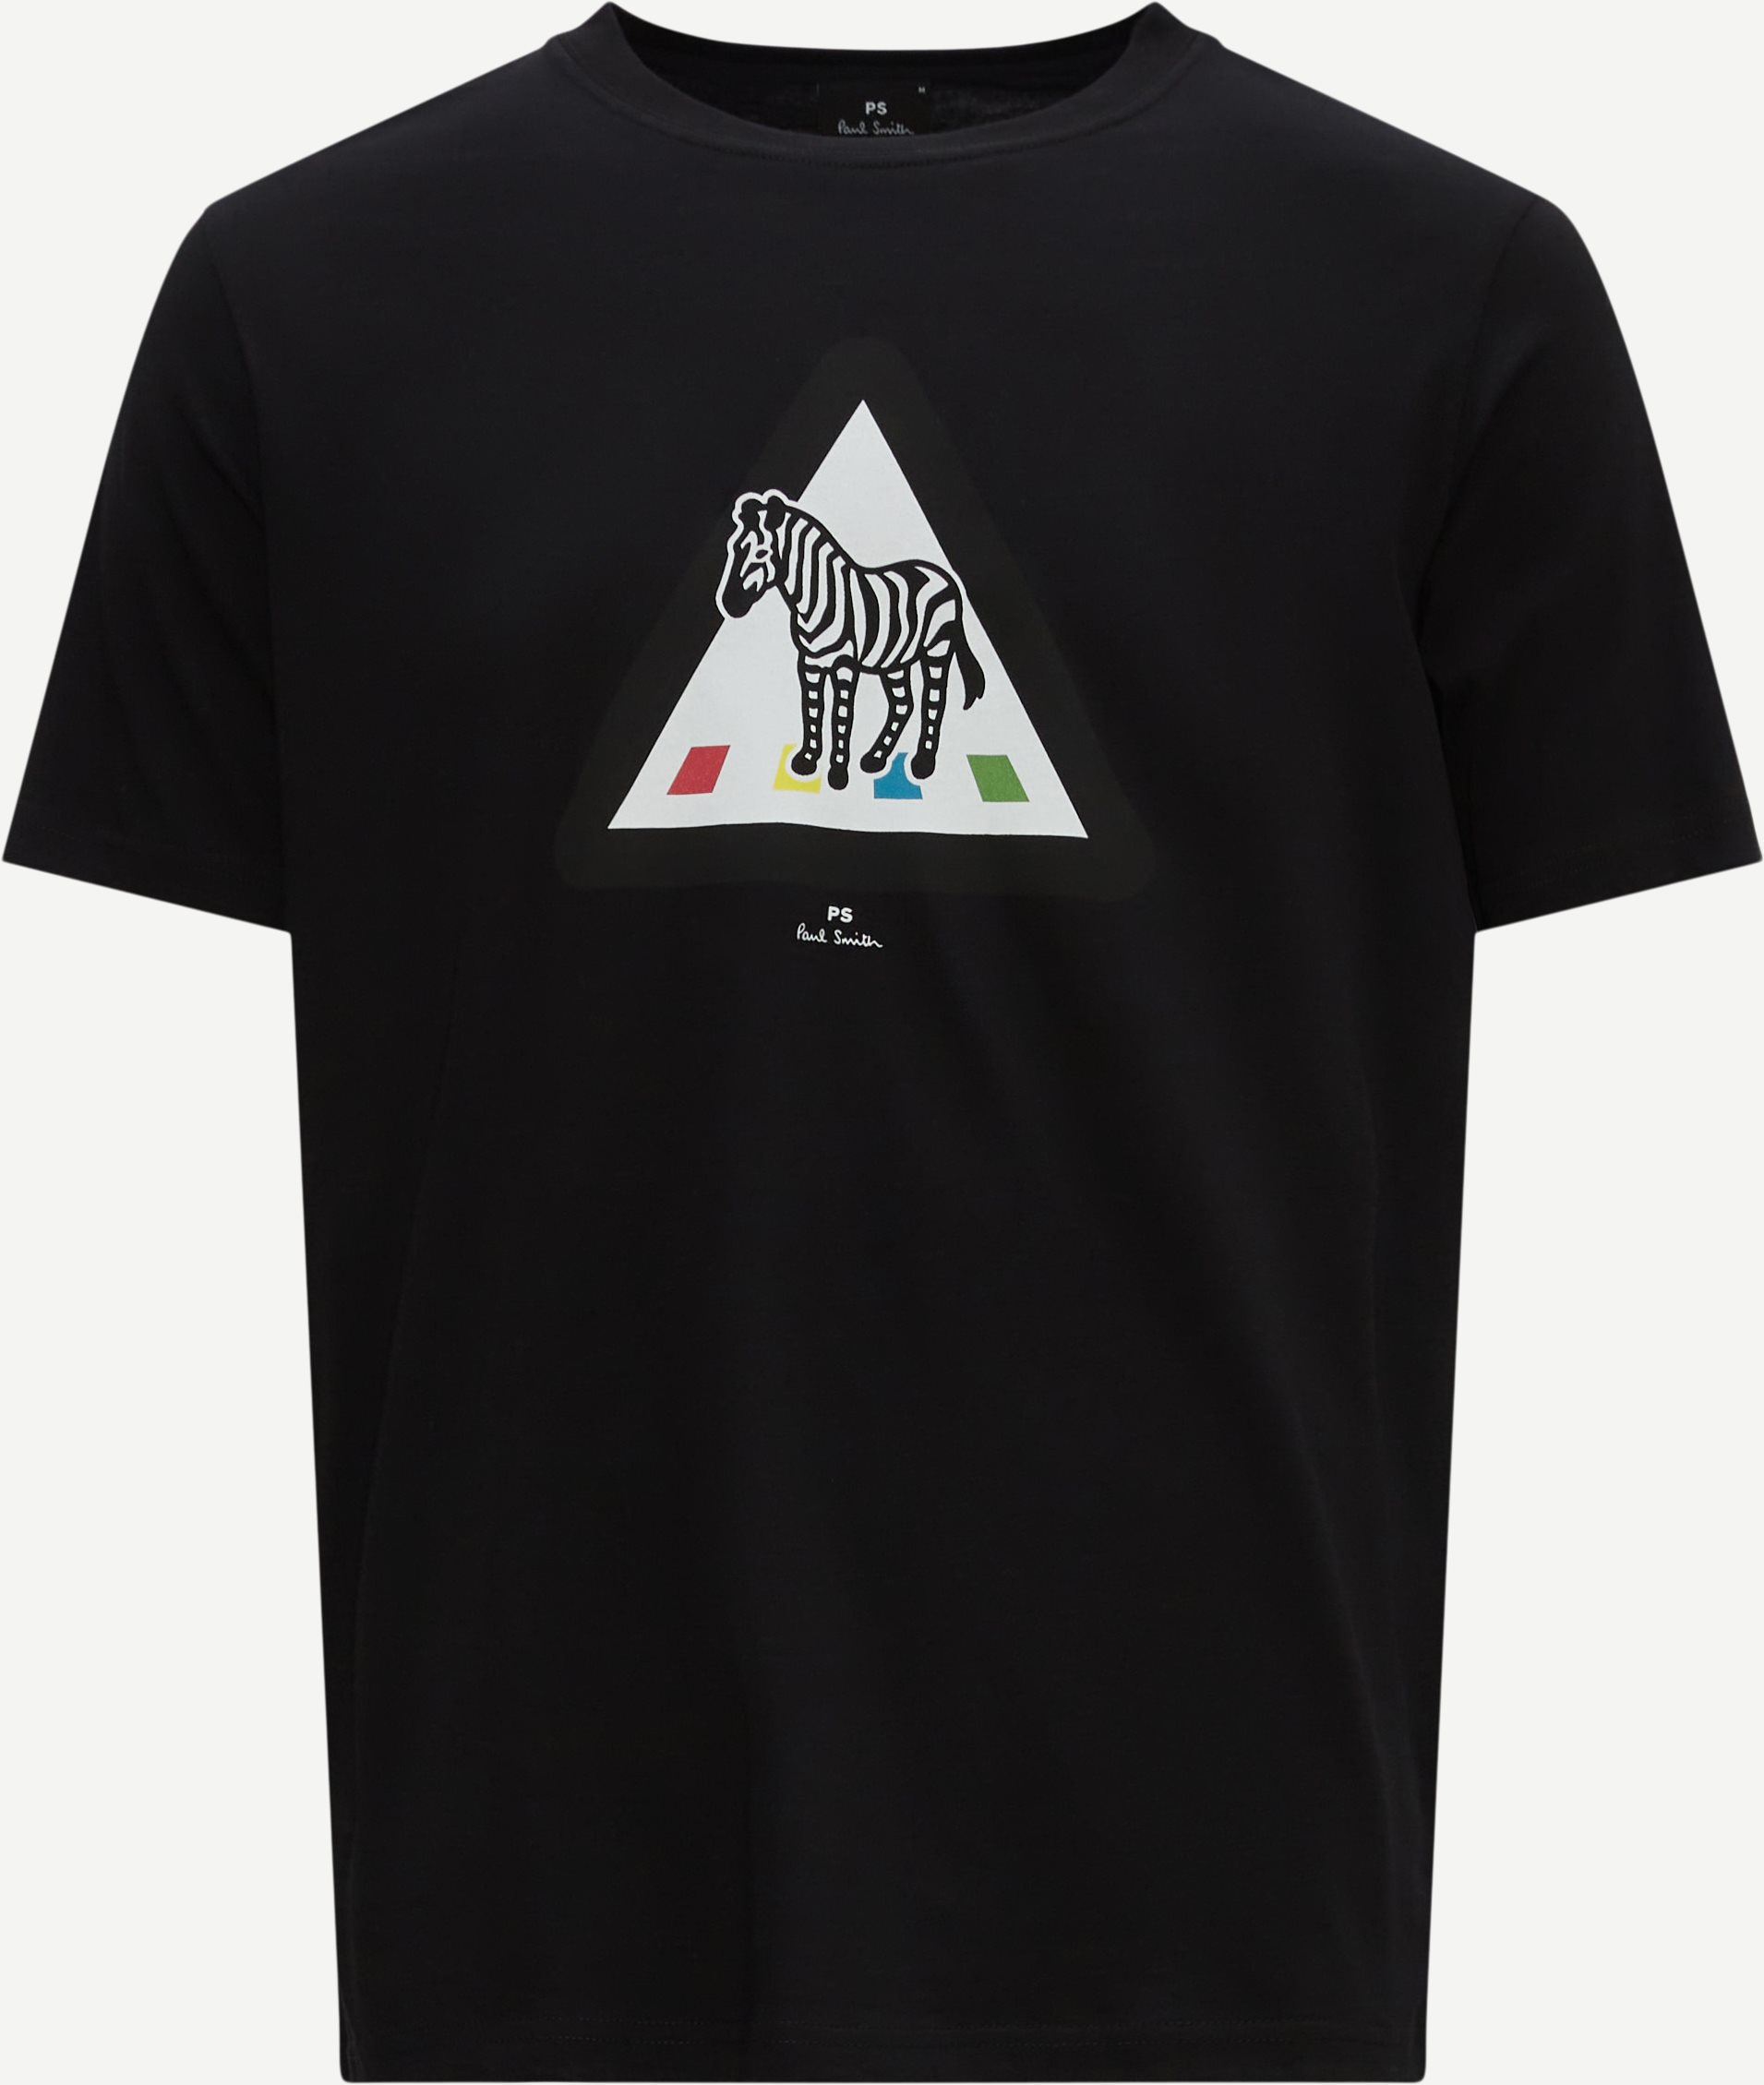 PS Paul Smith T-shirts 011R-KP3724 ZEBRA CROSSING Black